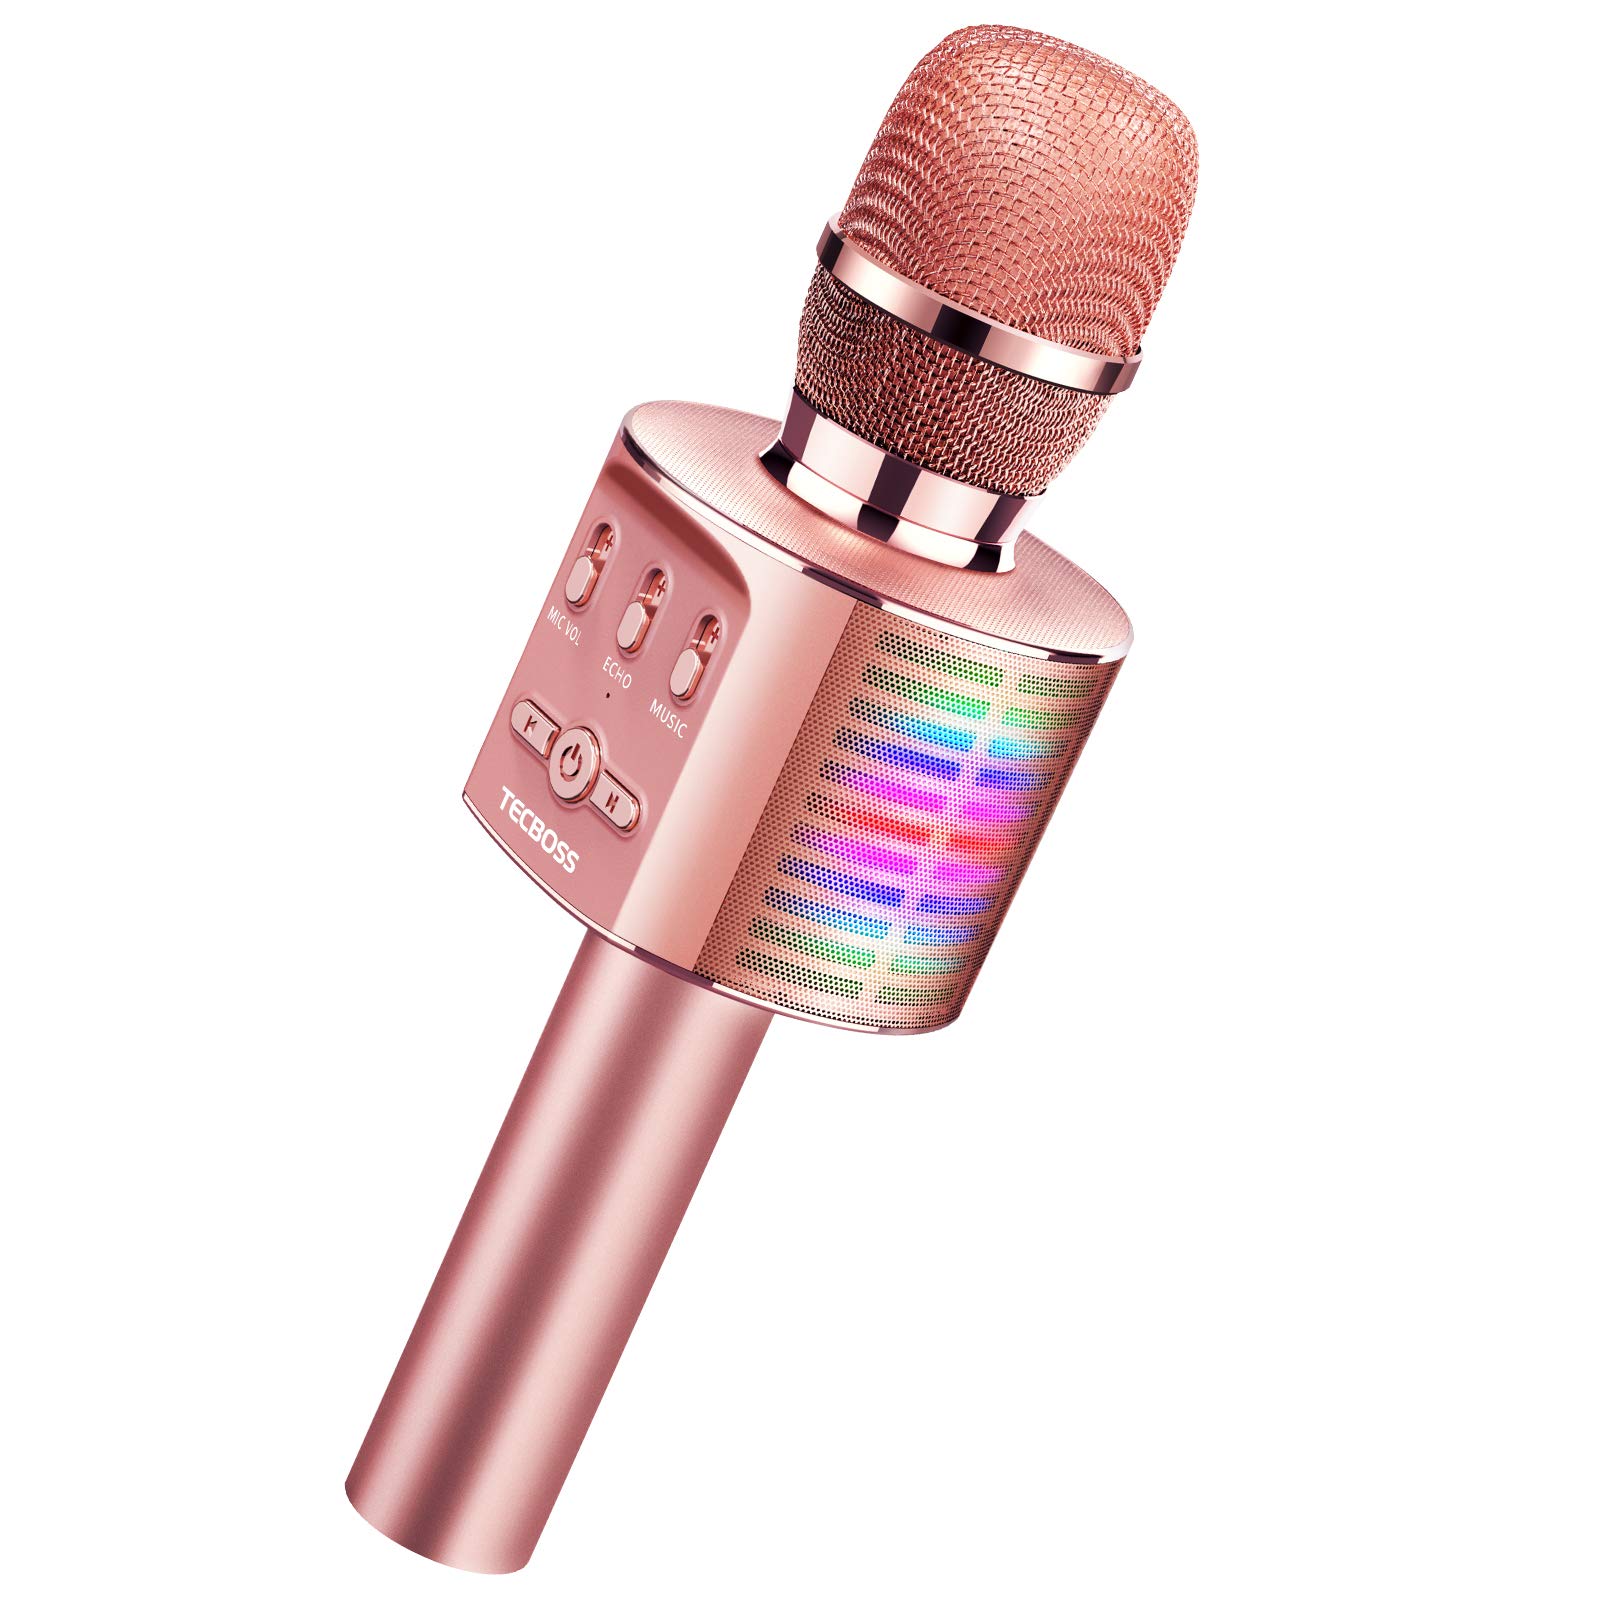 Karaoke microphone